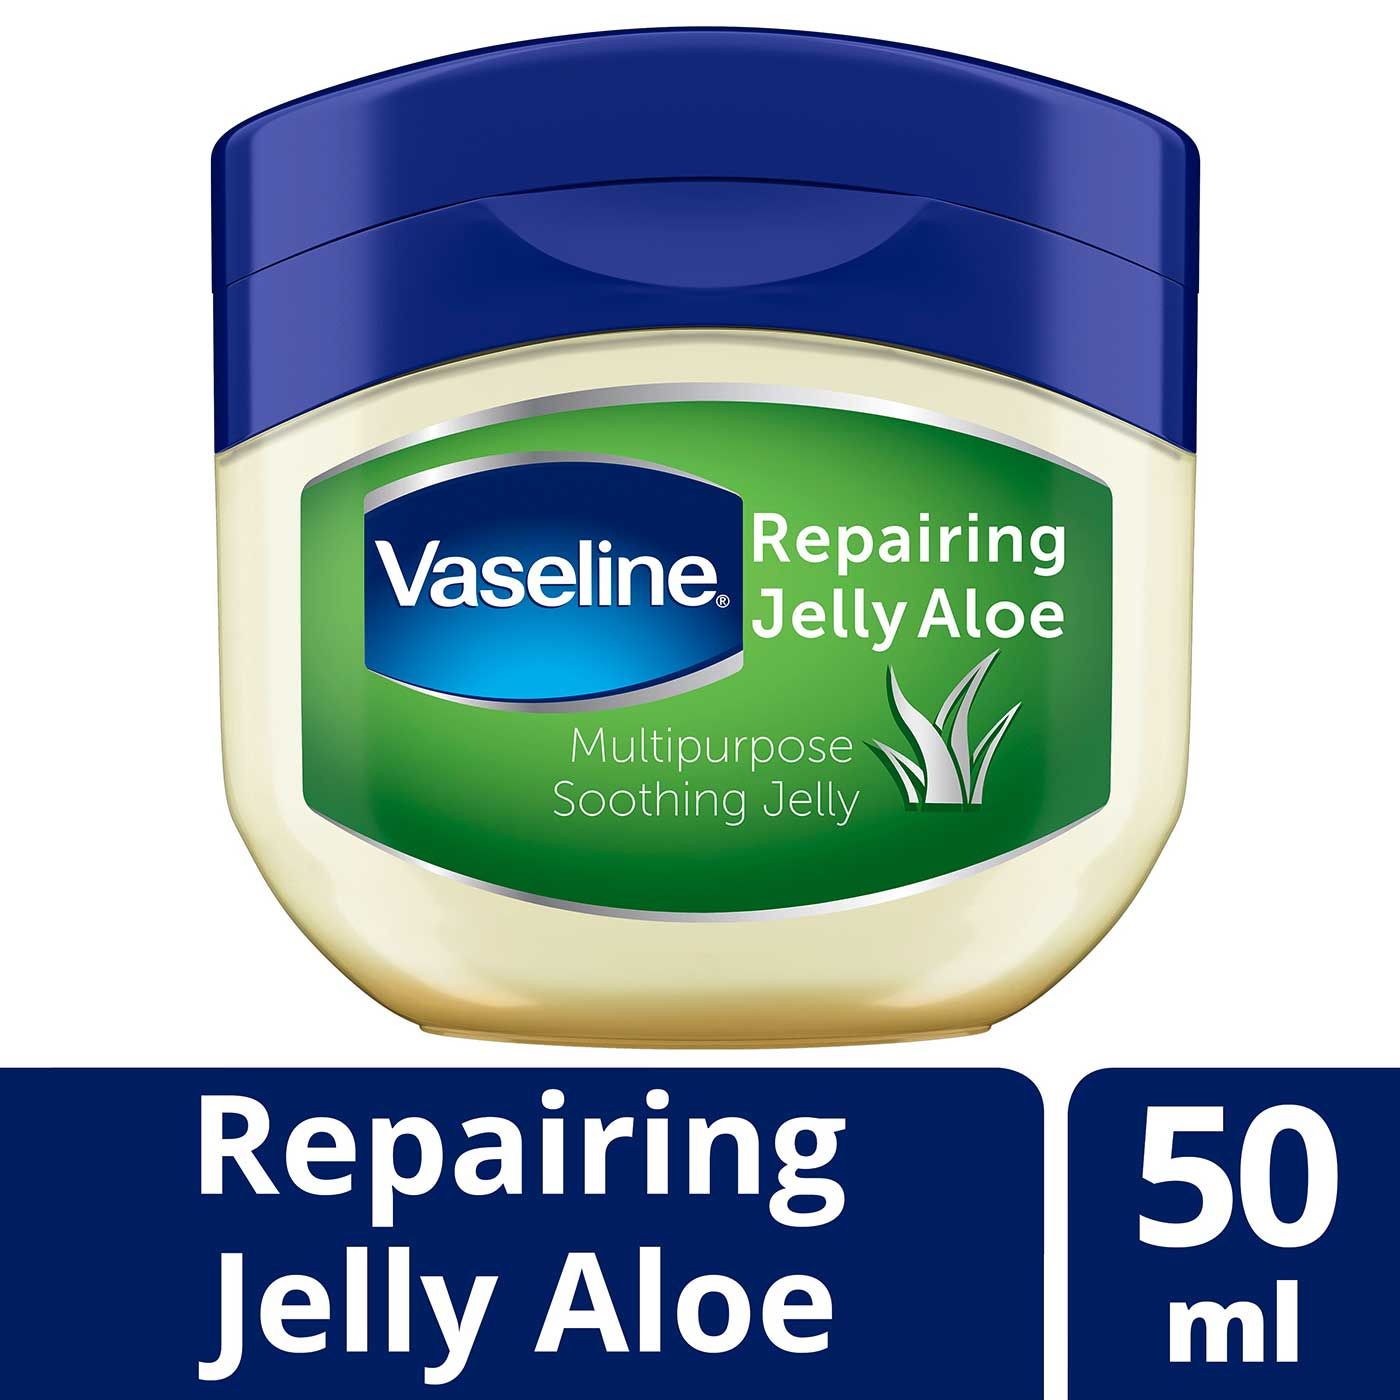 Vaseline Multi Purpose Repairing Jelly Aloe 50ml - 1